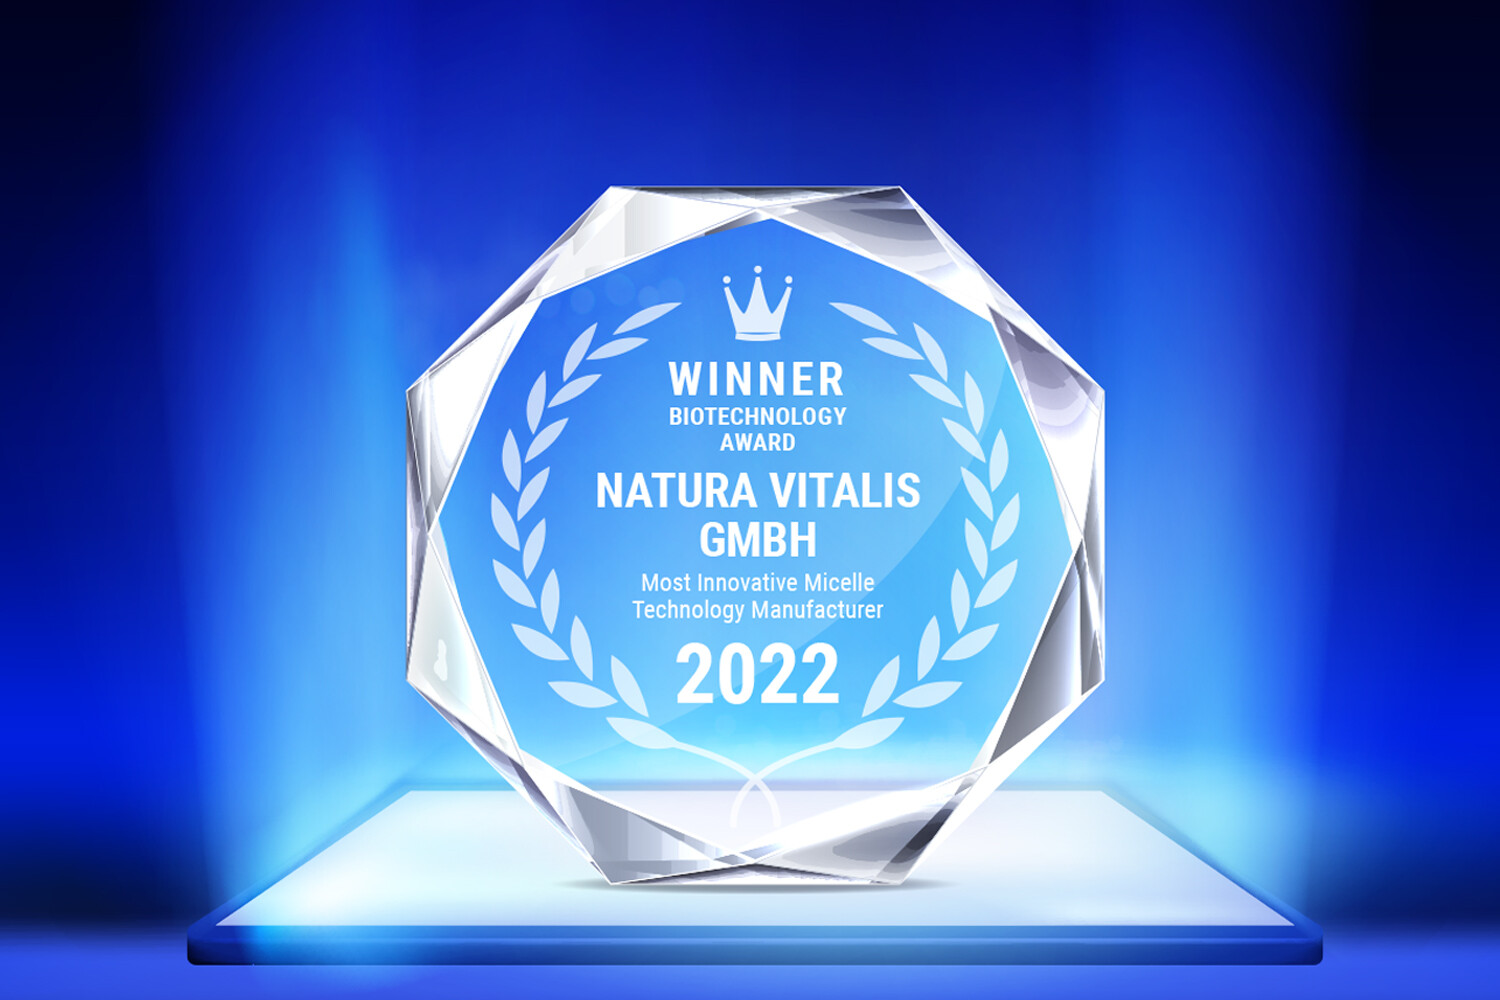 Another international award for Natura Vitalis